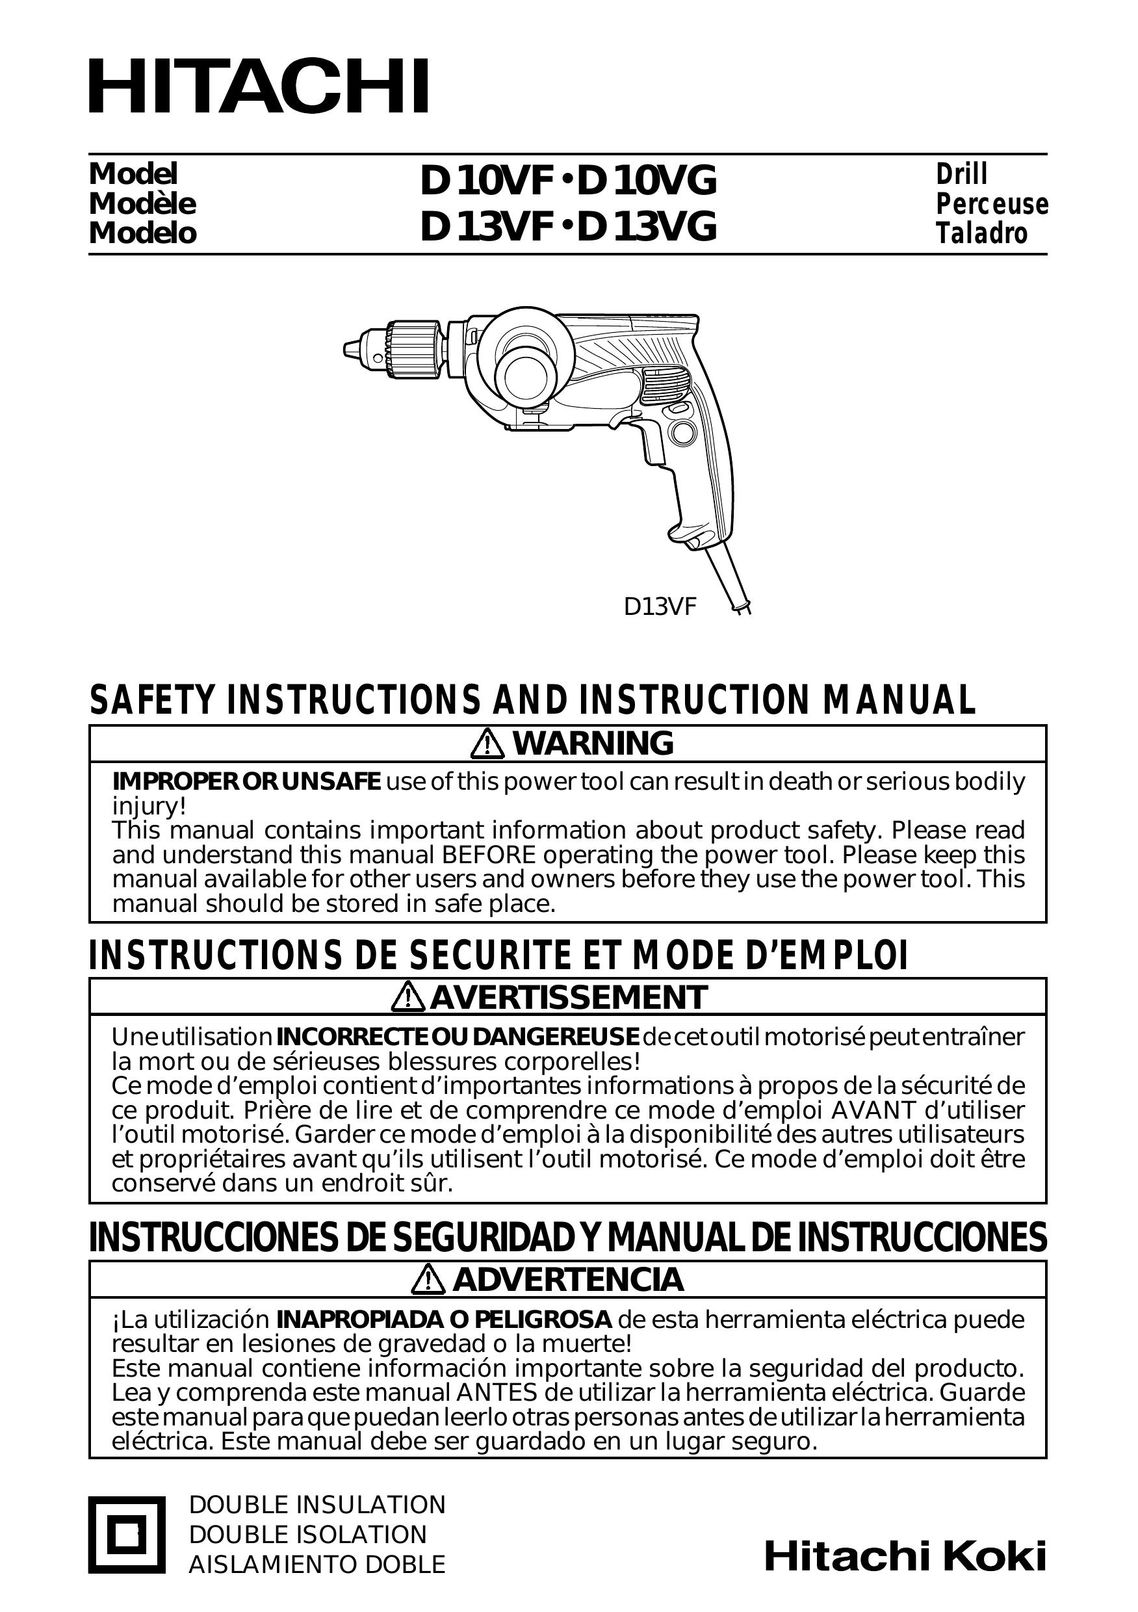 Hitachi D10VF Cordless Drill User Manual